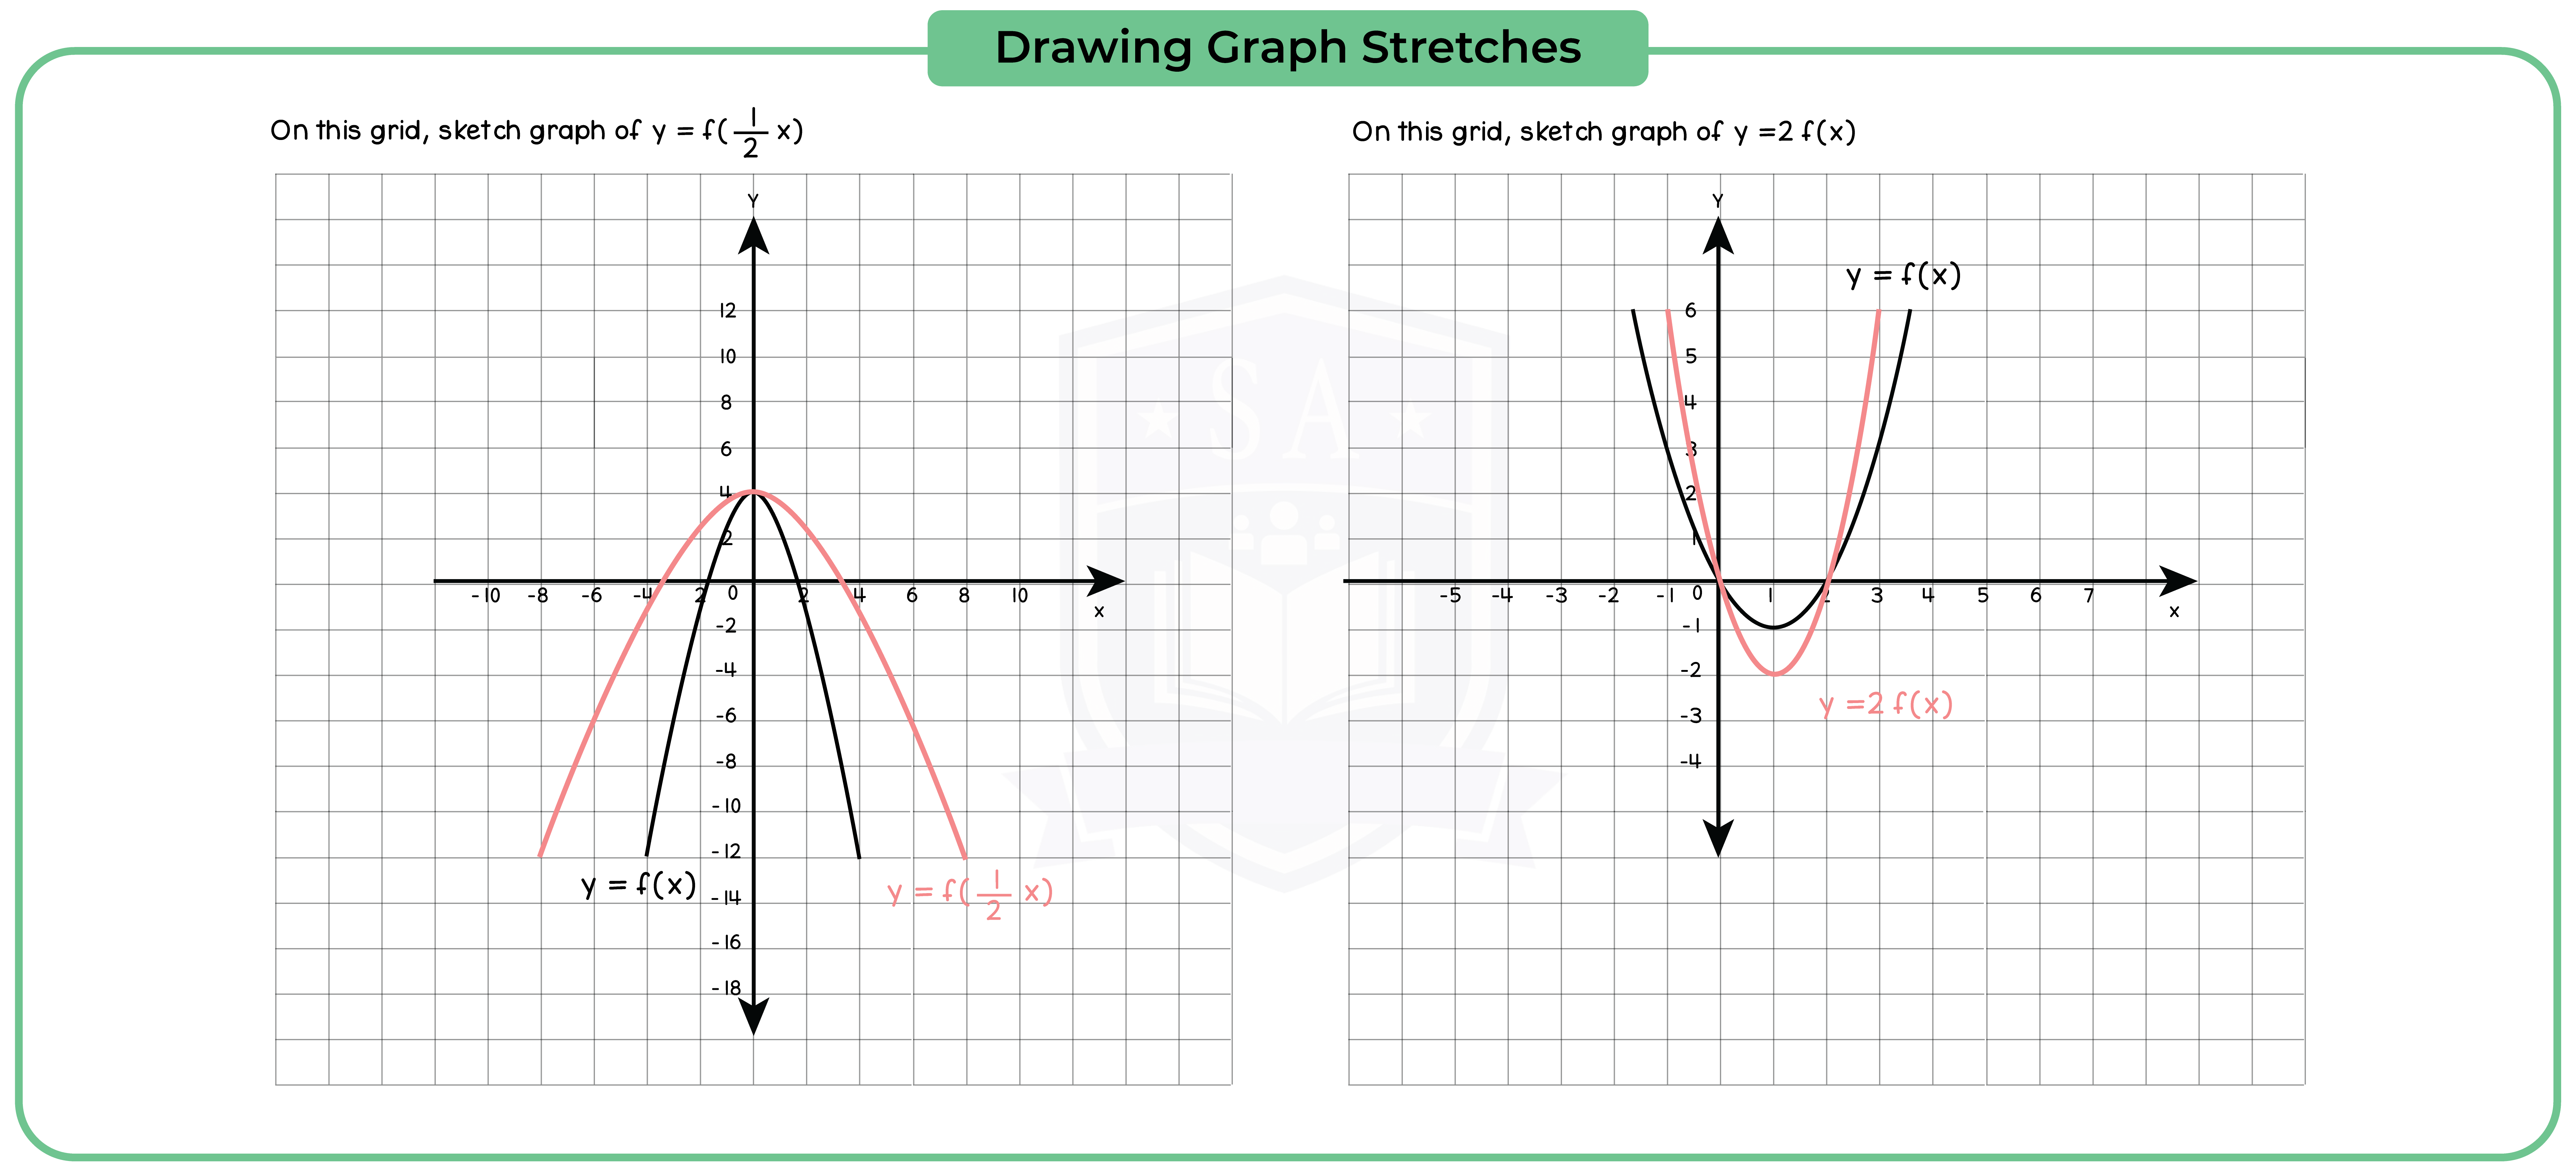 edexcel_igcse_mathematics a_topic 23_graphs_020_Drawing Graph Stretches